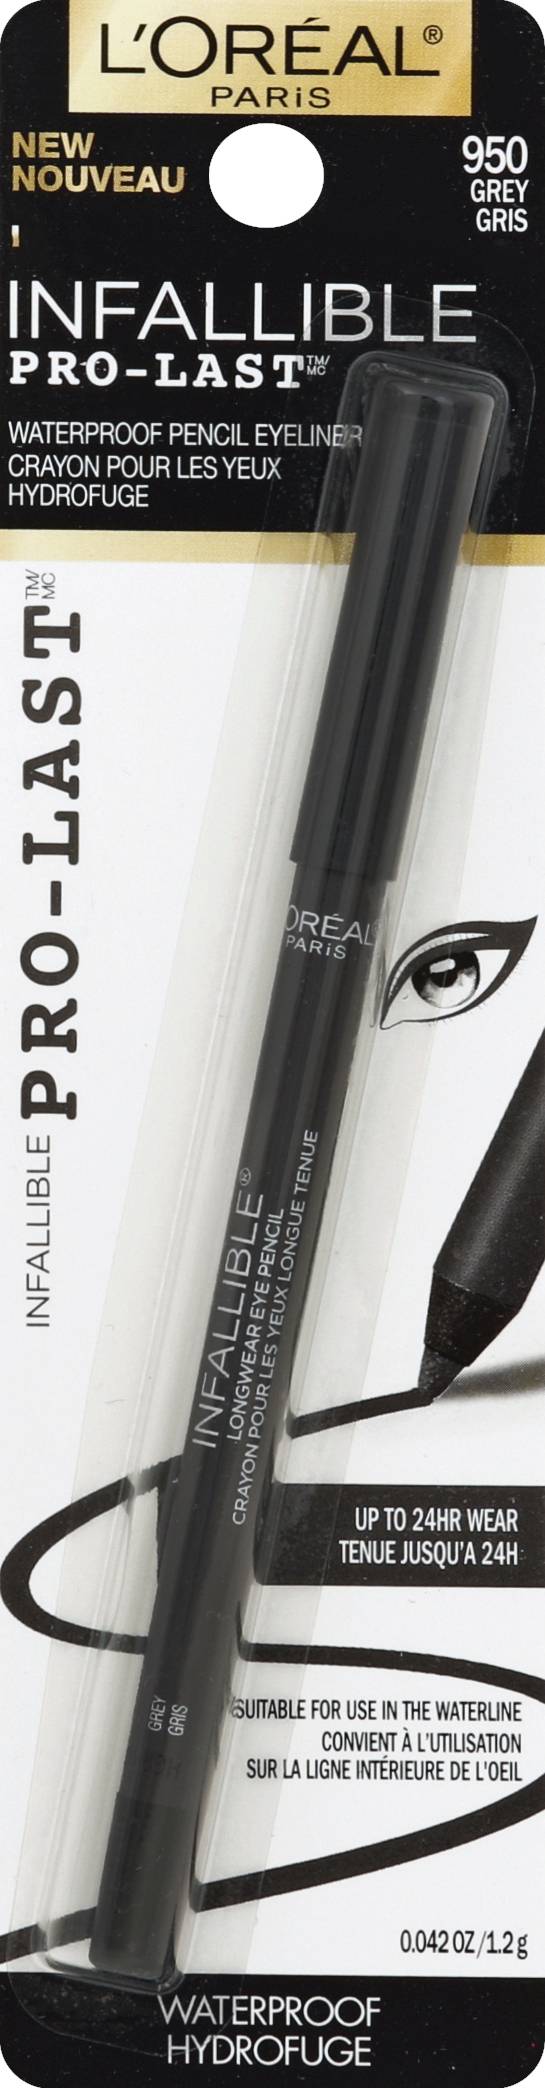 L'oréal Infallible Pro-Last Waterproof Pencil Eyeliner 950 Grey